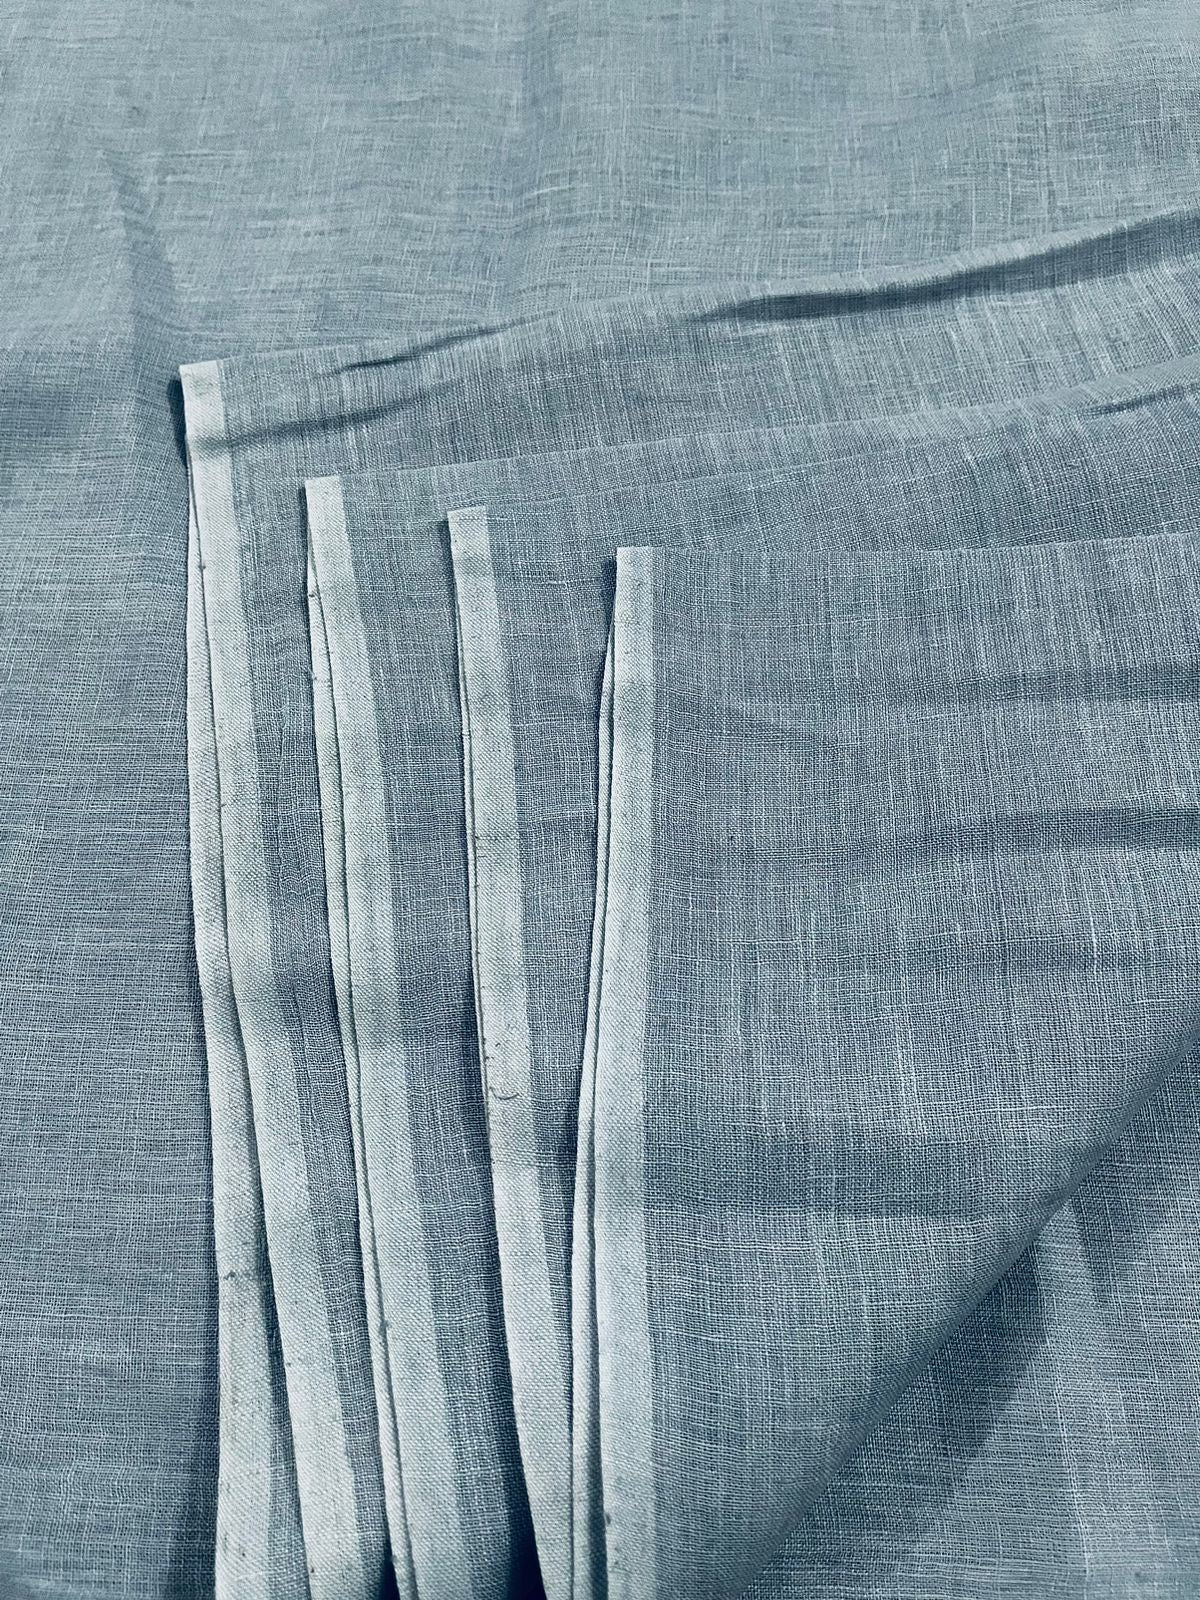 40 lea 58 inch 100% pure Handloom Linen Fabric -Powder Blue